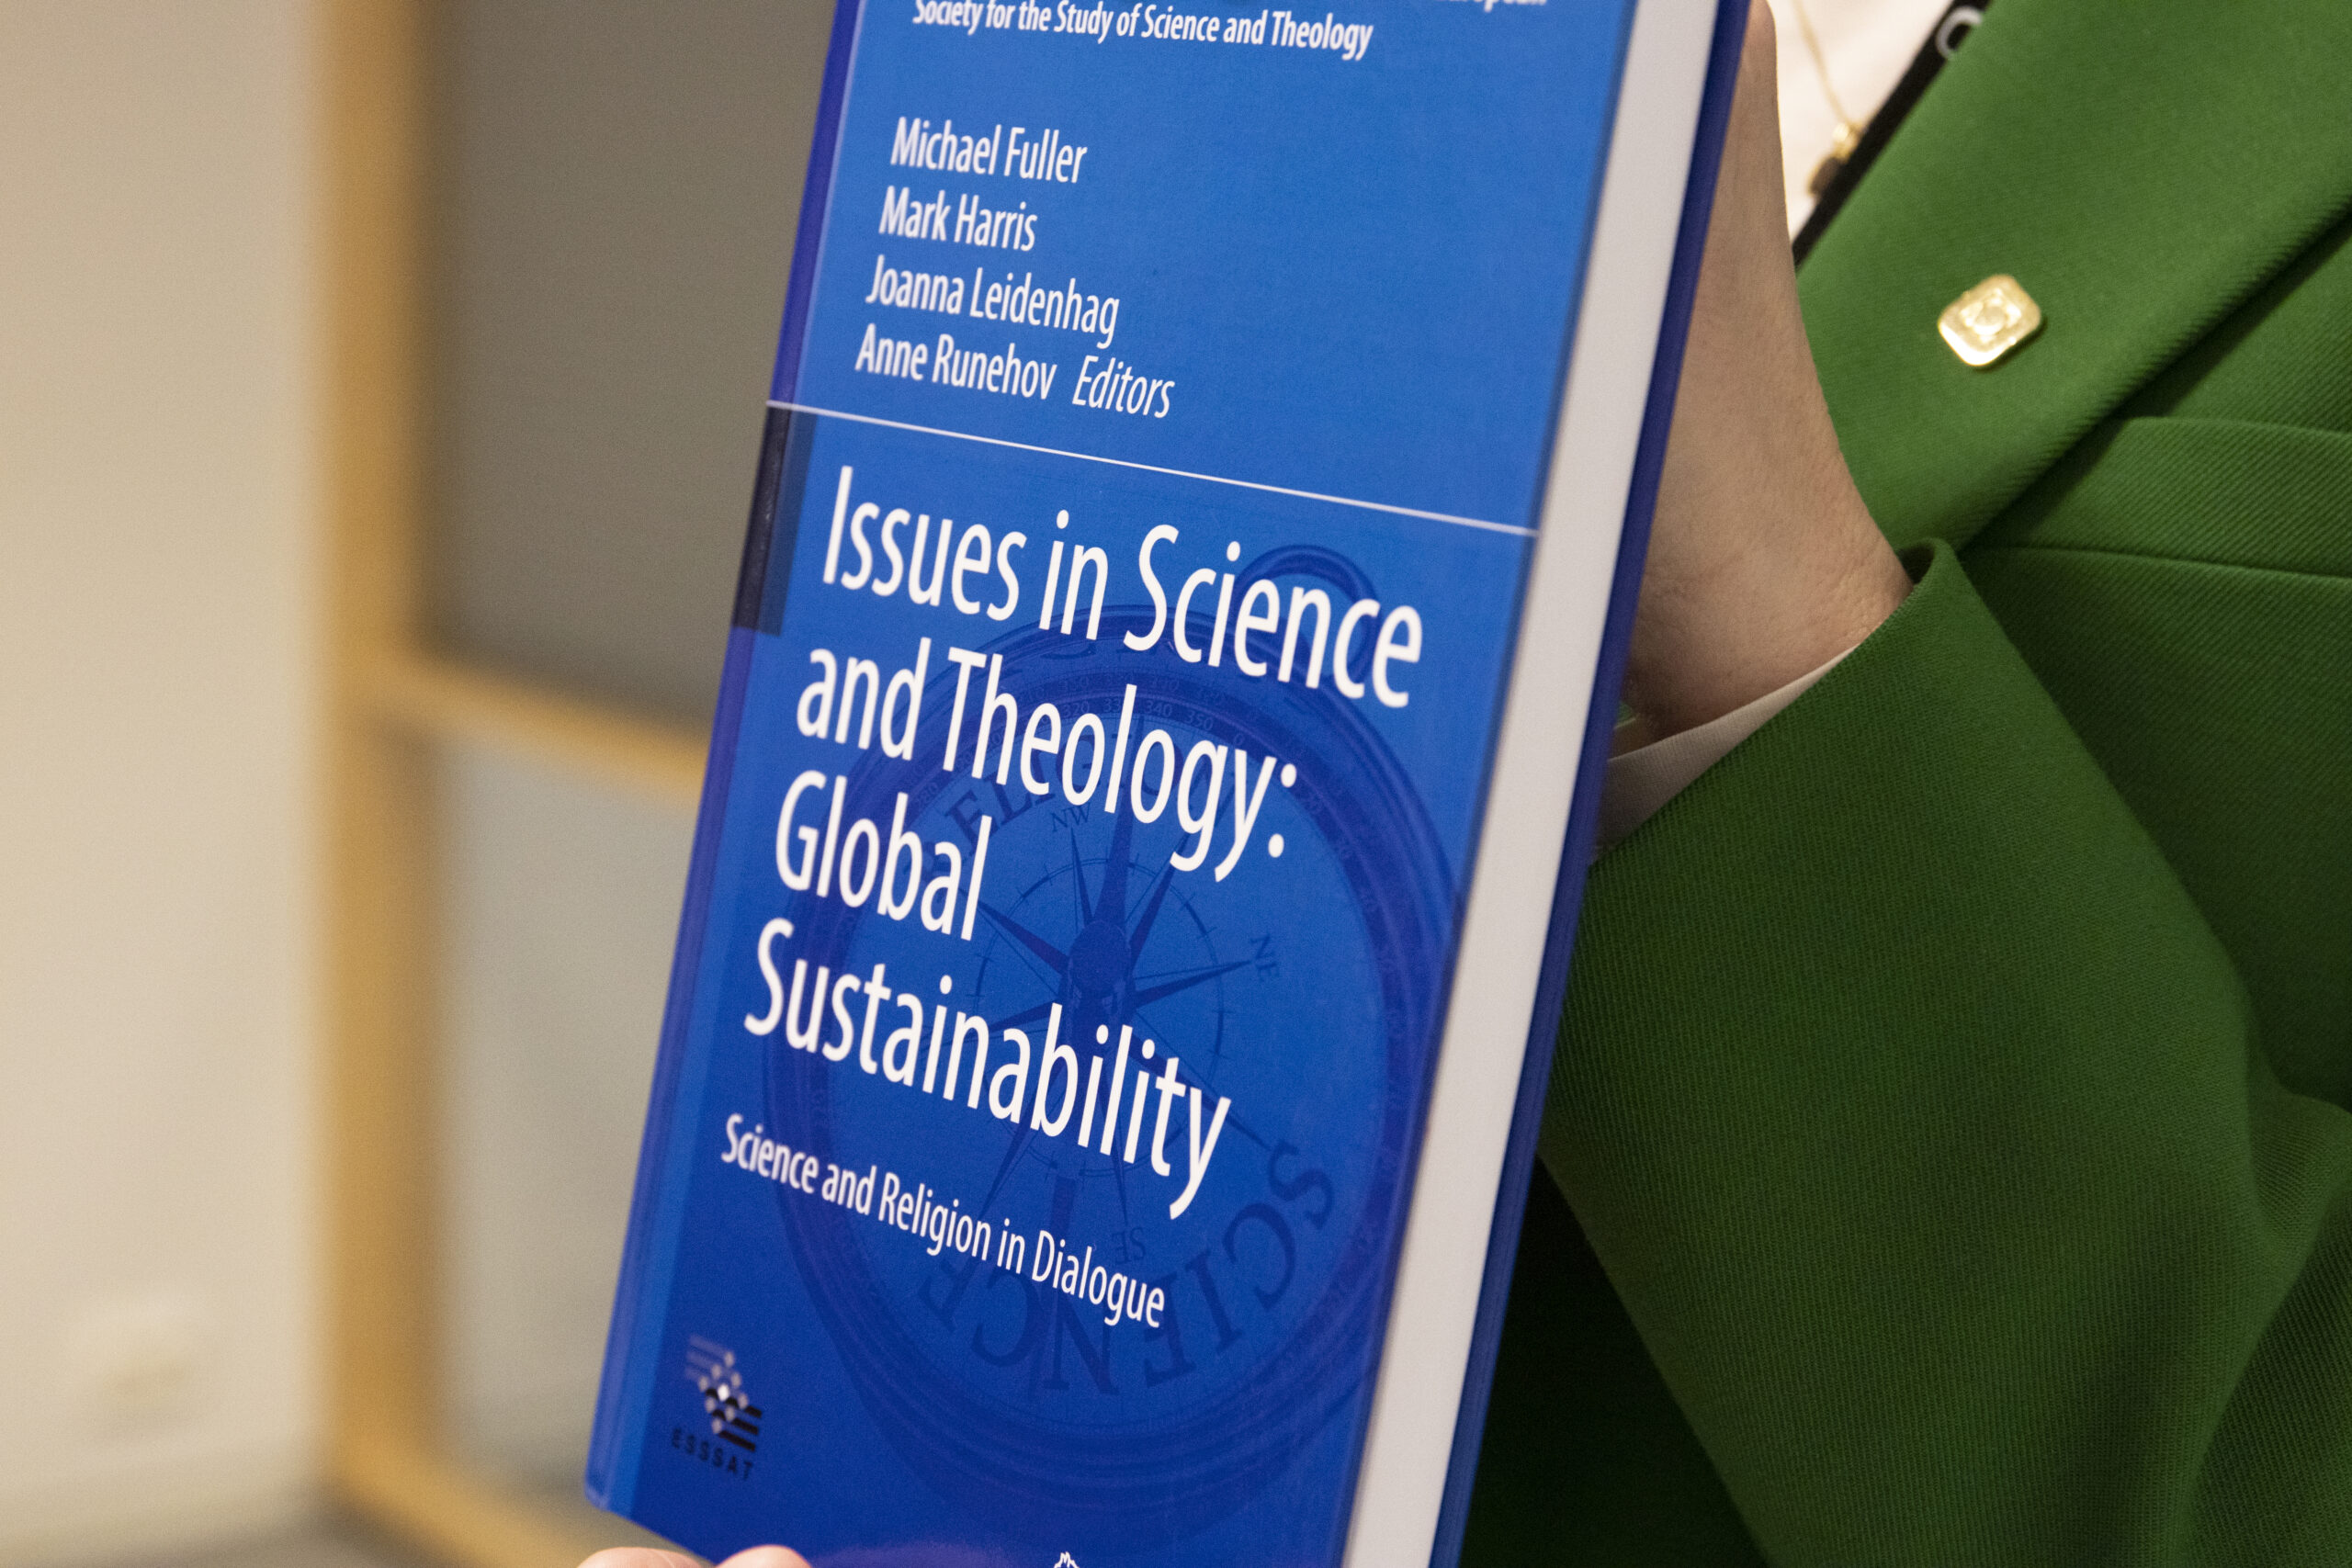 Den nylige publiserte boken Global sustainibility: Science and religion in Dialog.